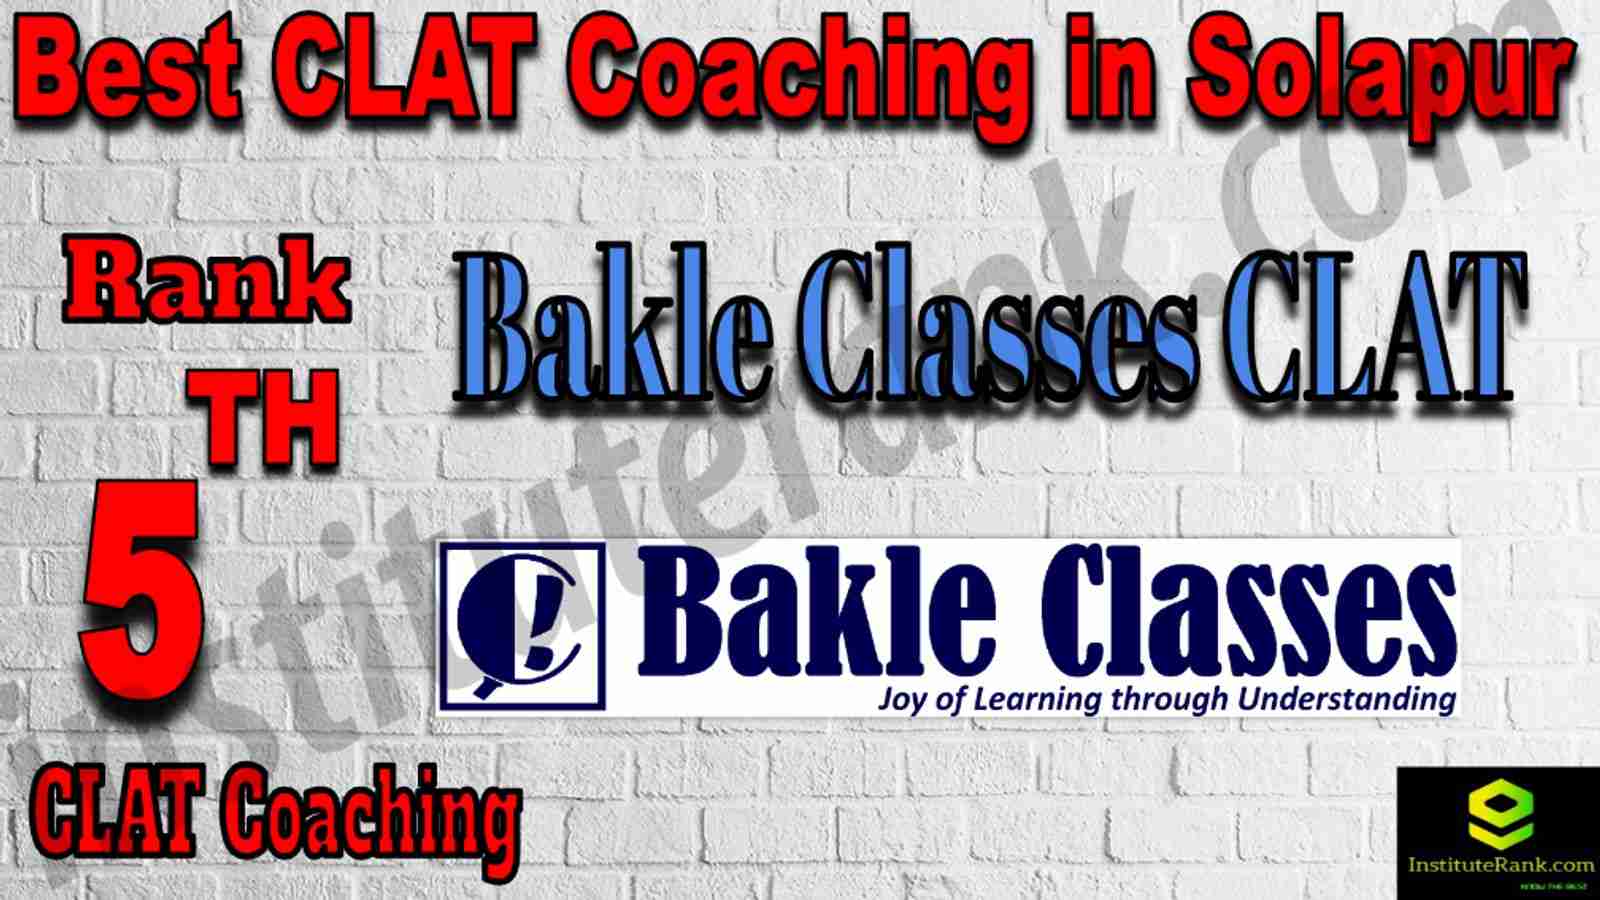 5th Best Clat Coaching in Solapur